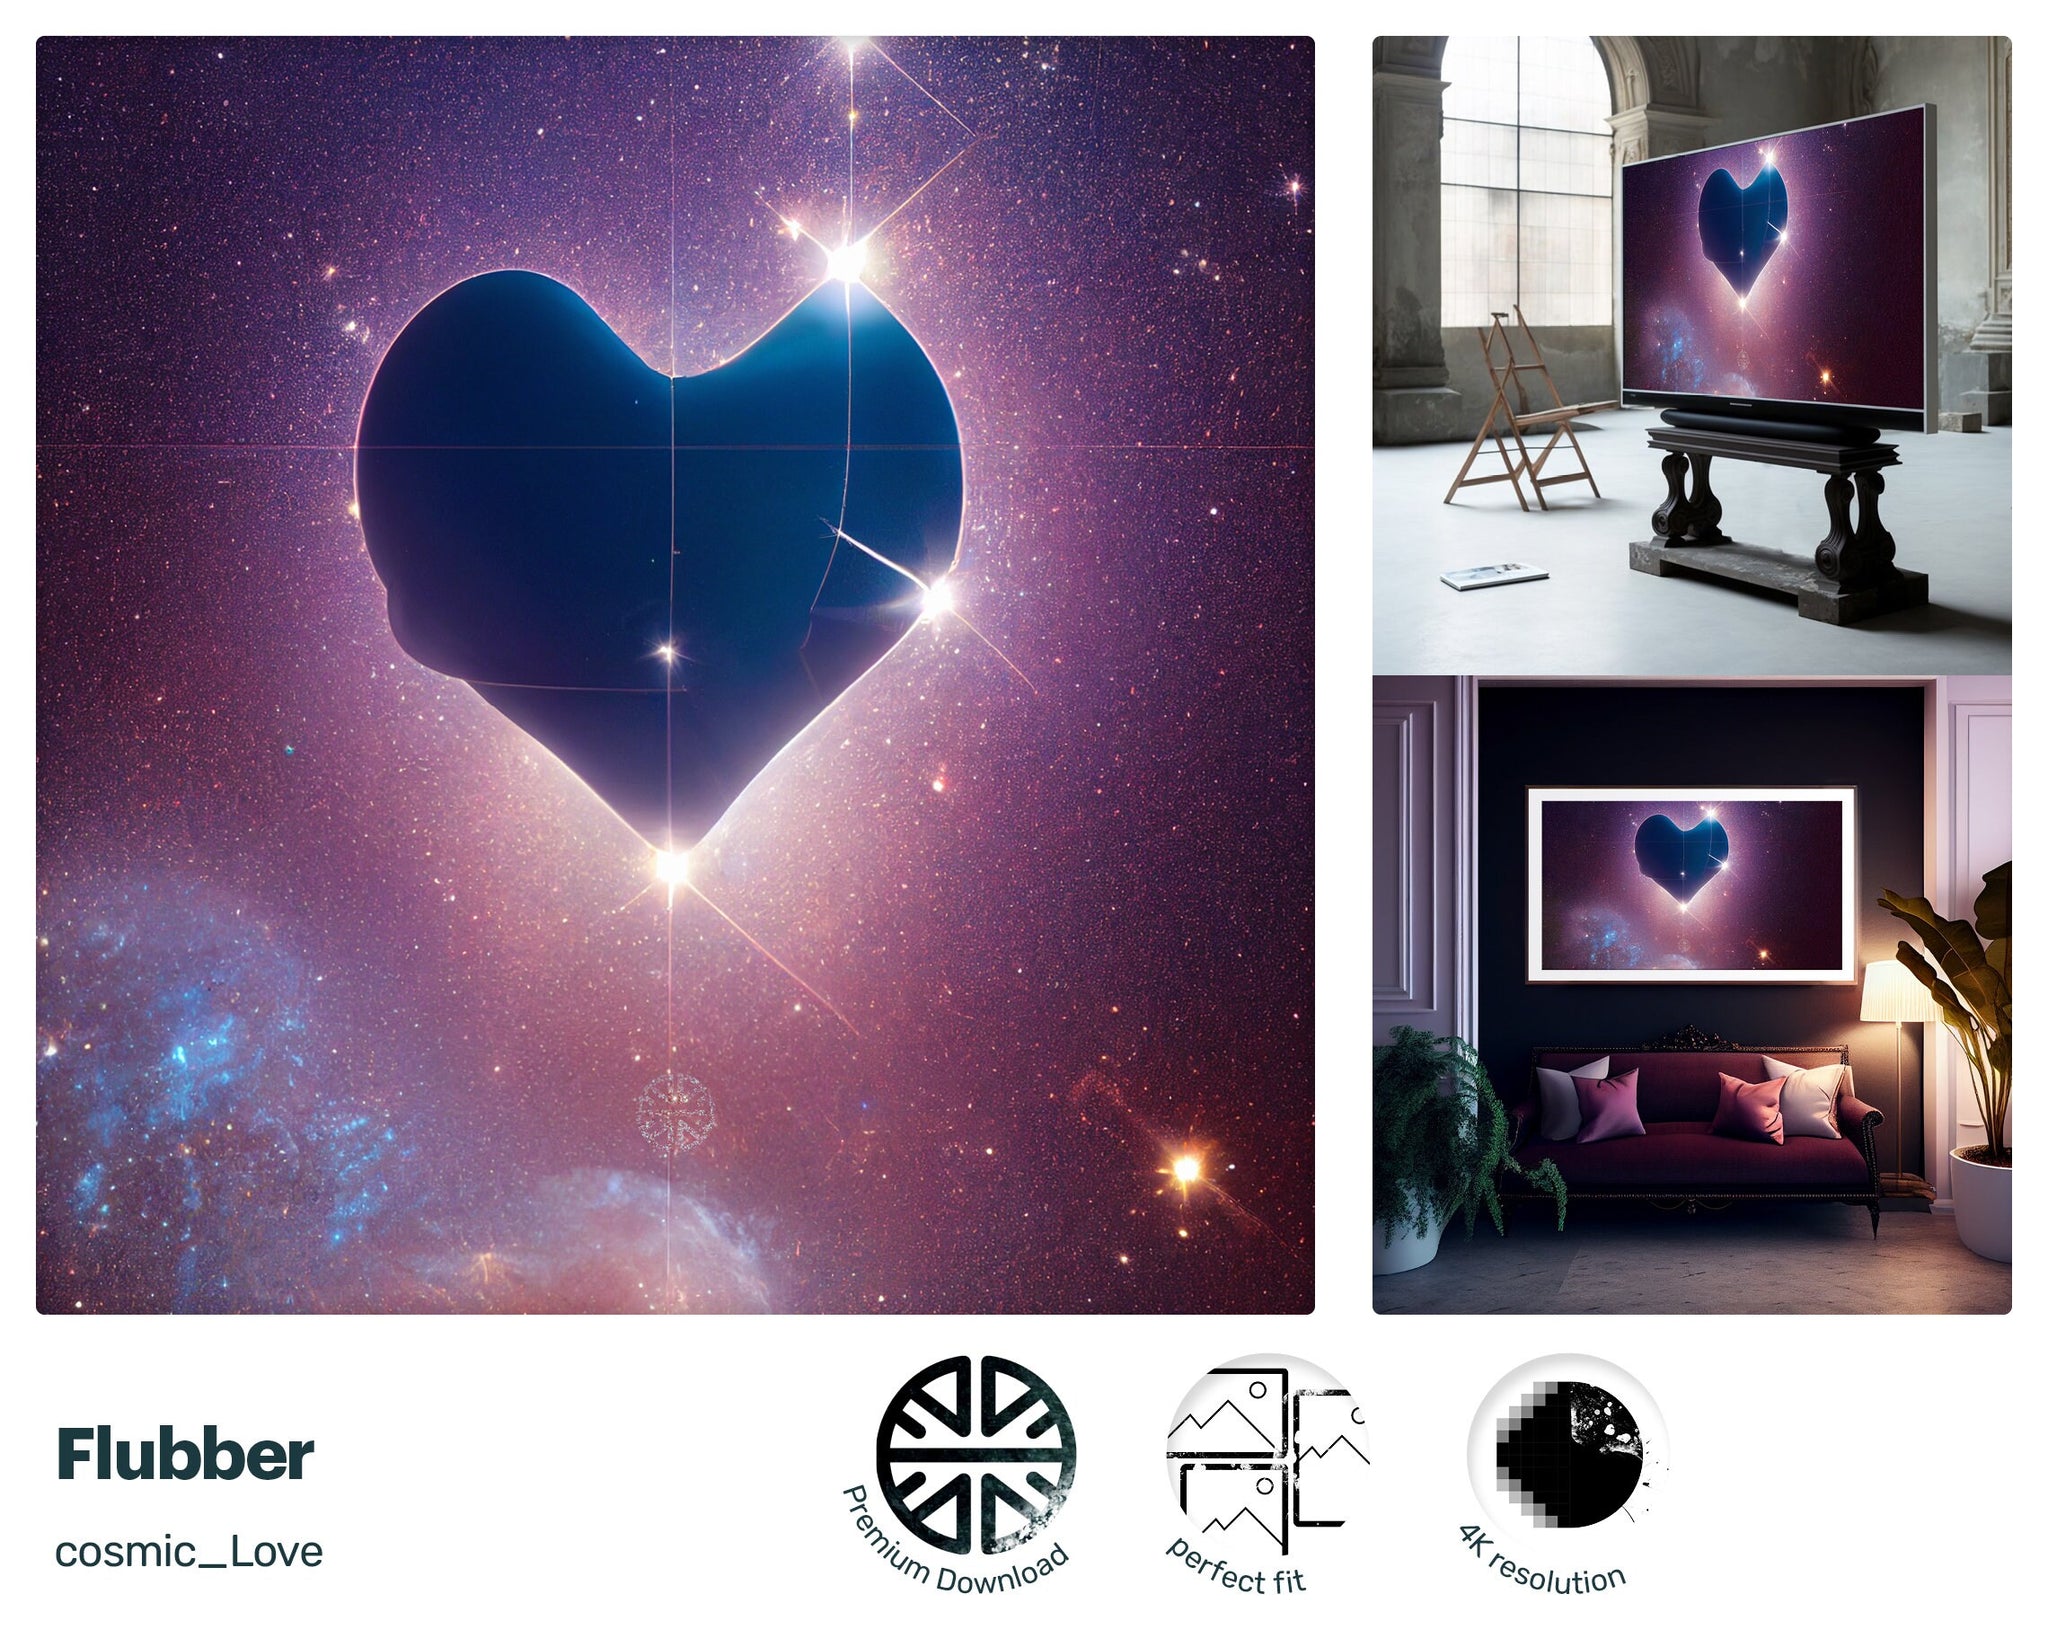 Samsung Frame TV Art, Flubber, james webb telescope, nerd culture, 2001 Space Odyssey, mens valentines gift